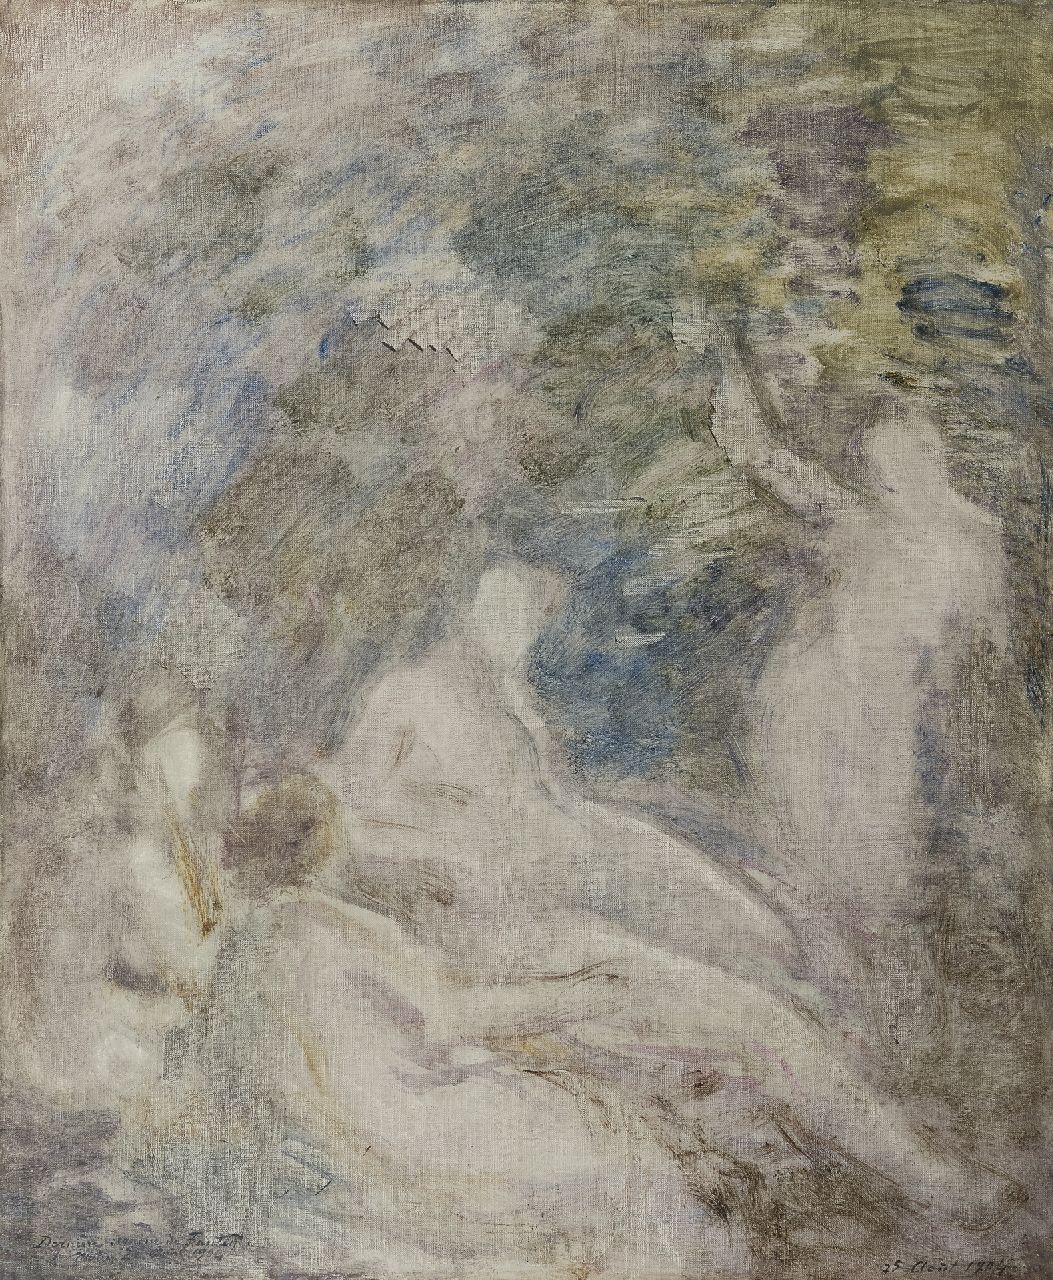 Henri Fantin-Latour | Trois baigneuses, Öl auf Leinwand, 65,1 x 54,0 cm, datiert 25. Aug. 1904